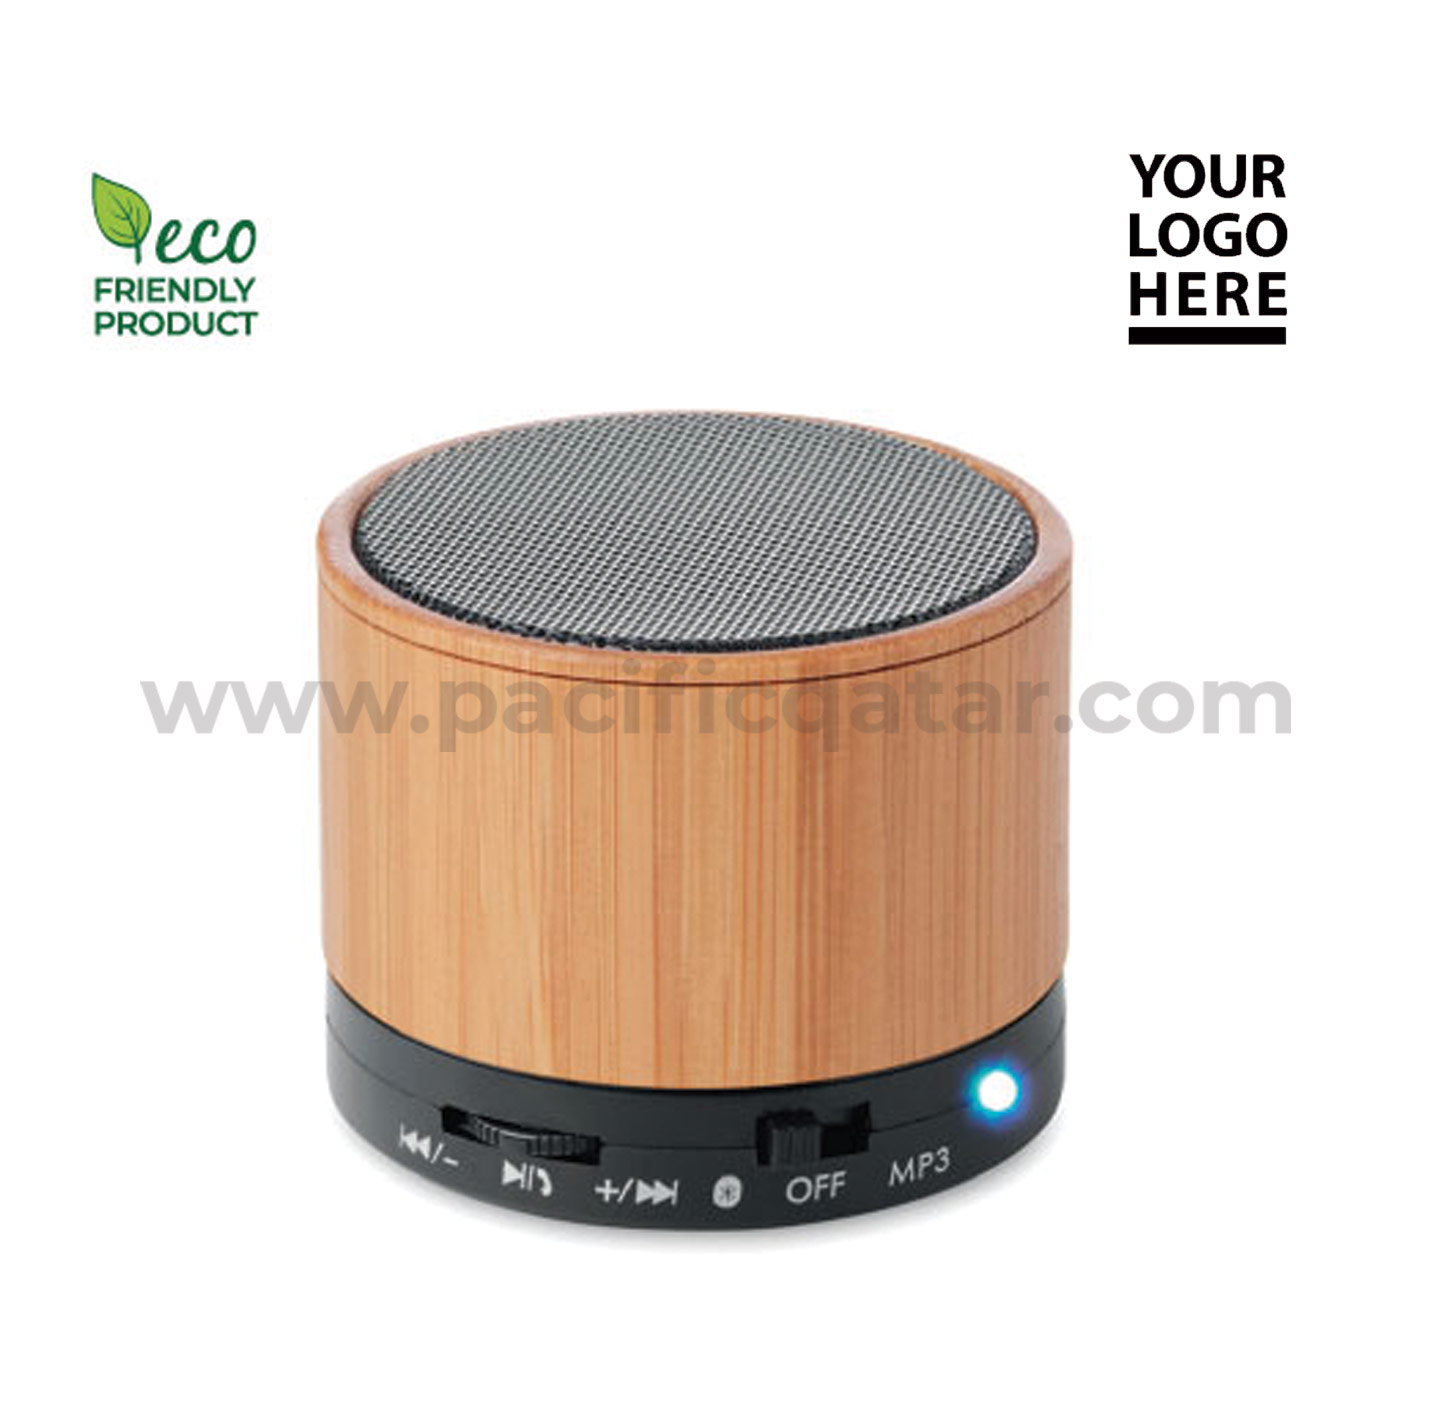 Eco friendly bluetooth speaker ms-07